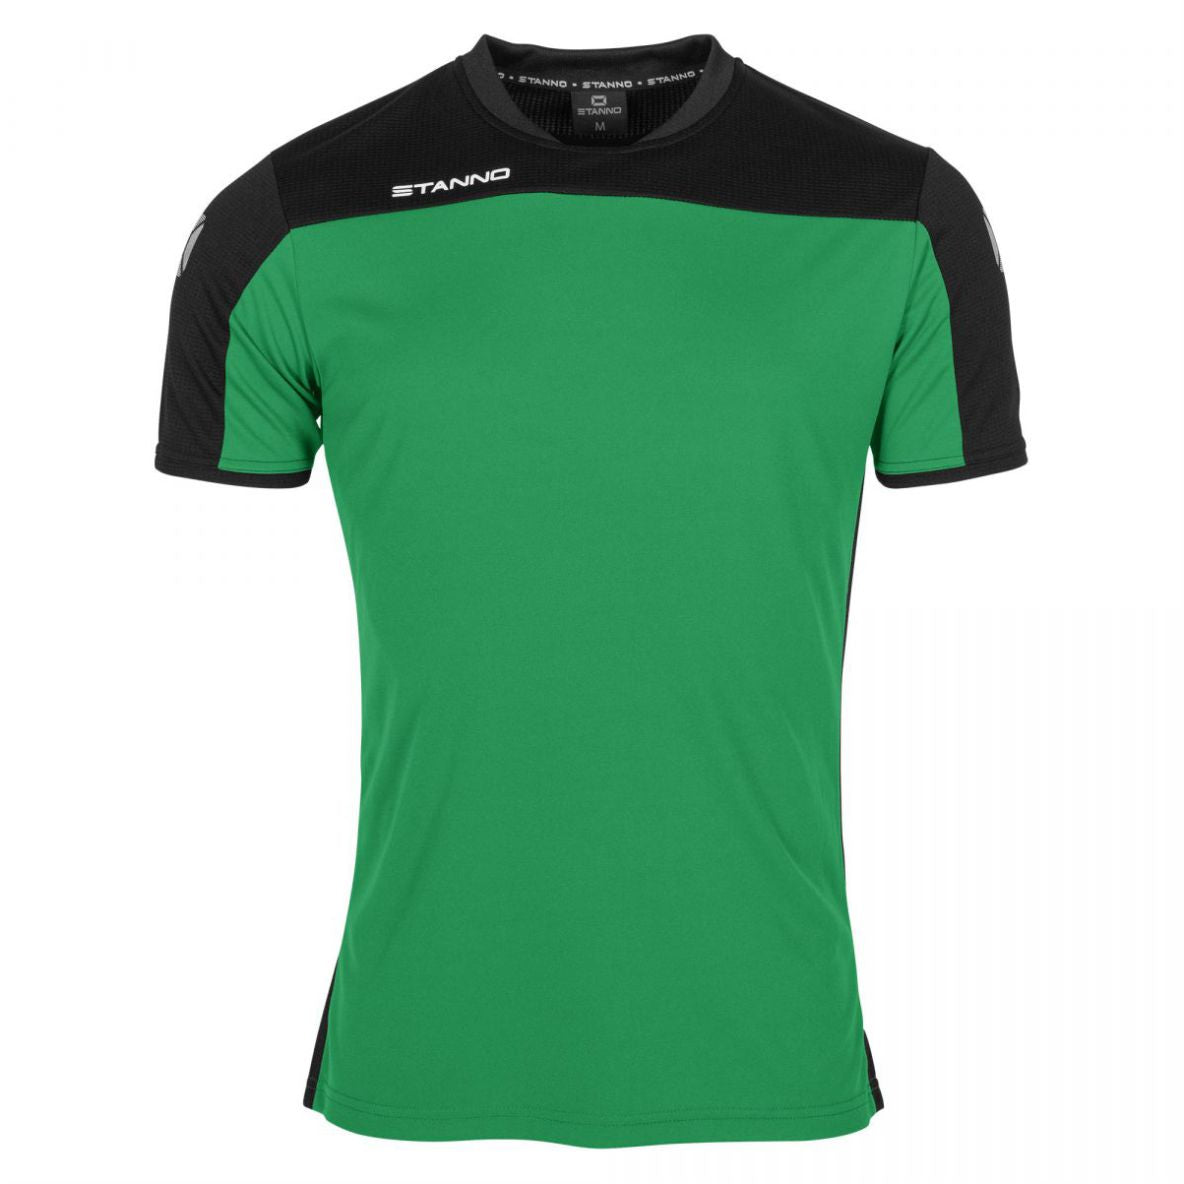 Stanno - Pride Shirt - Green & Black